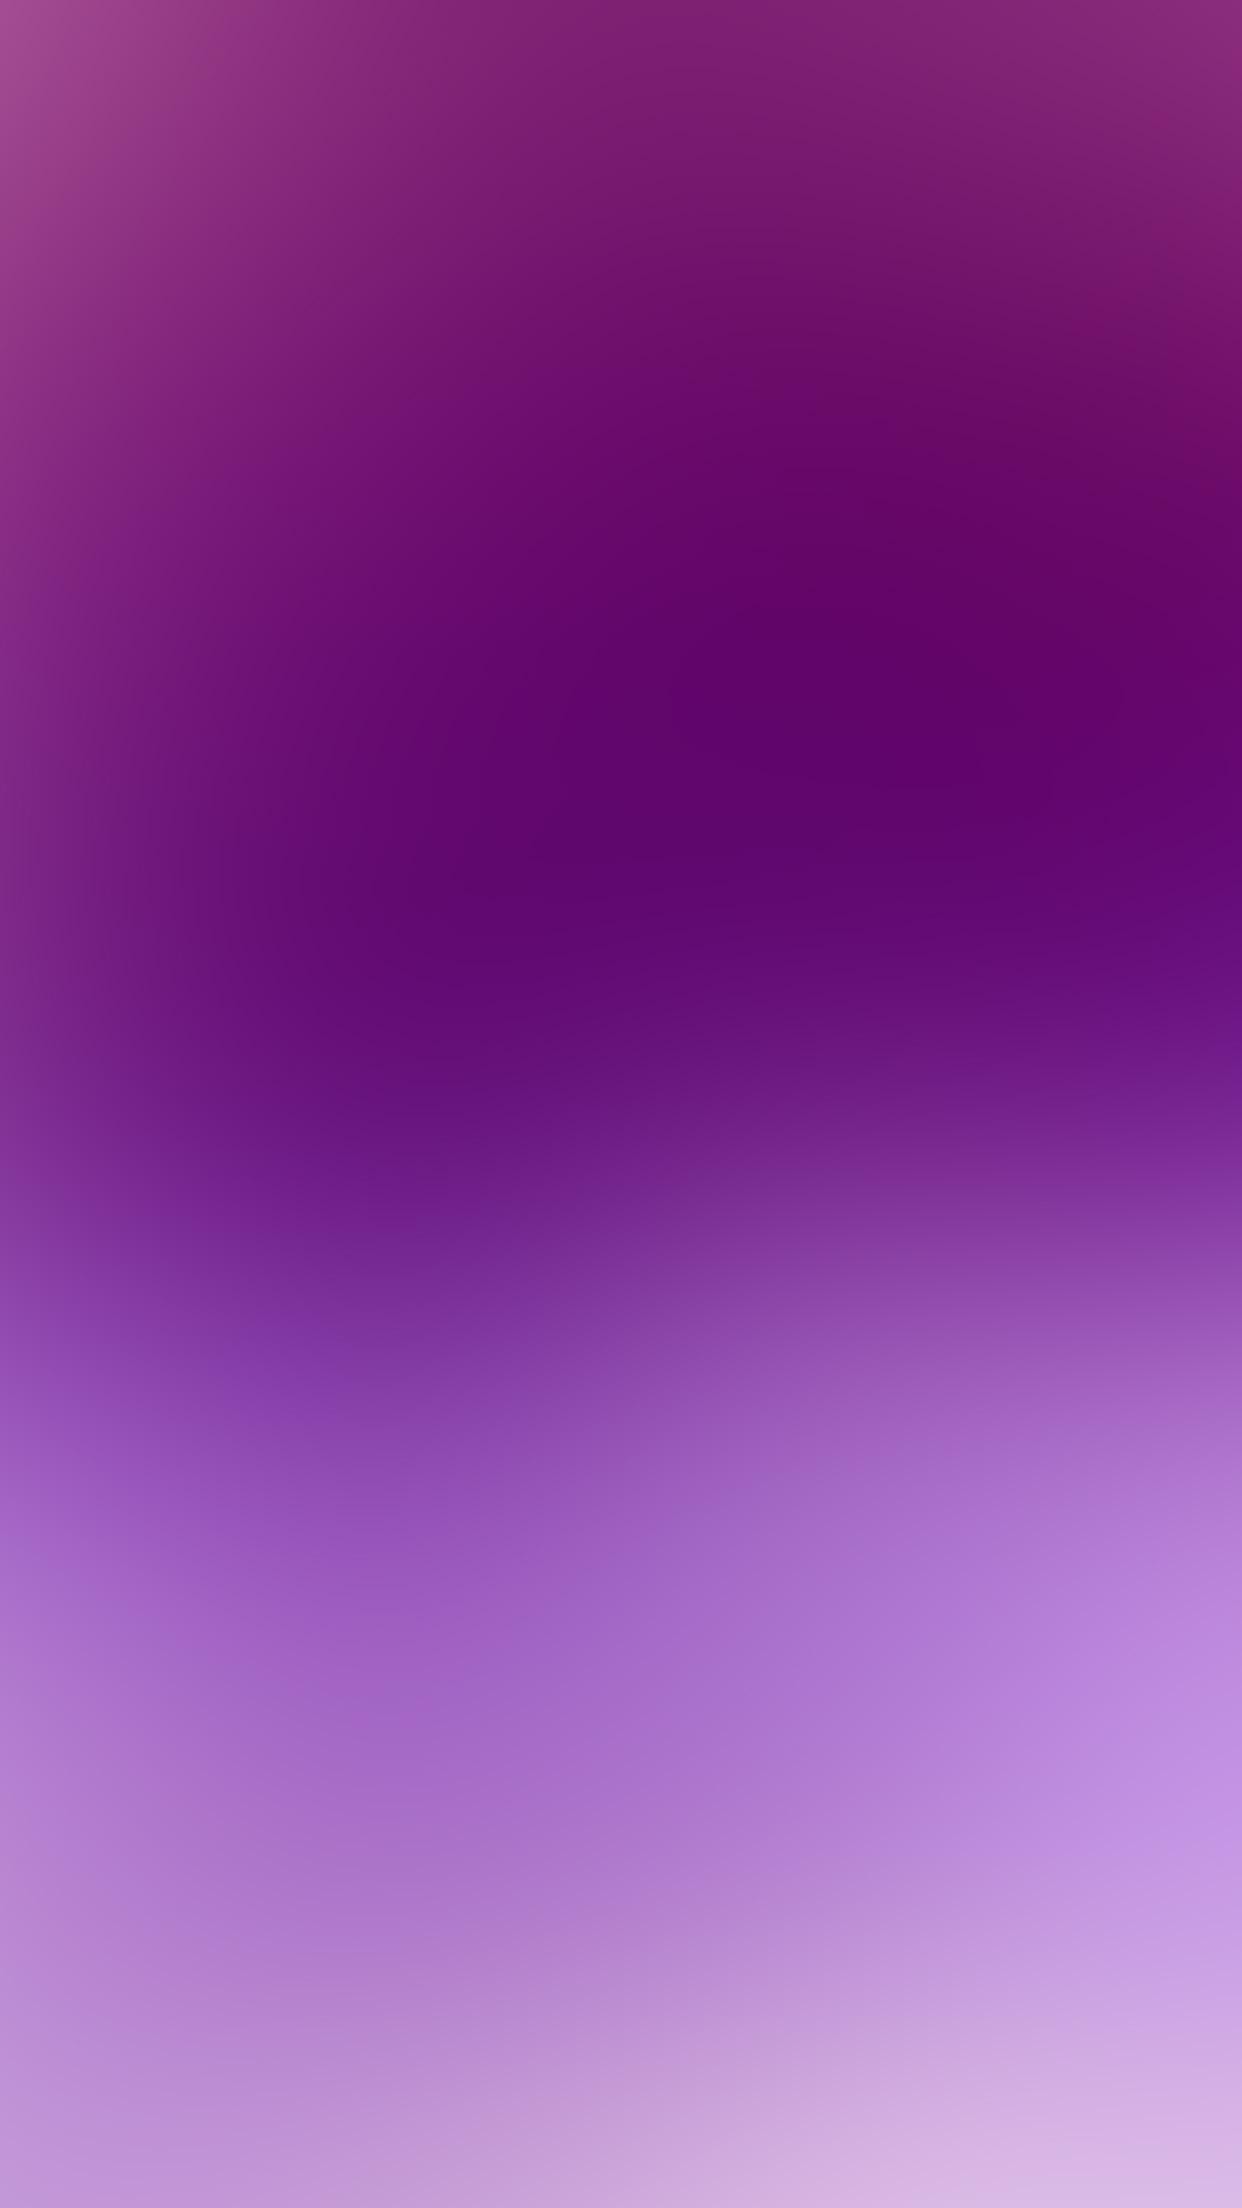 1242x2208 Purple Rain Gradation Blur - iPhone 6 Plus Wallpaper ...